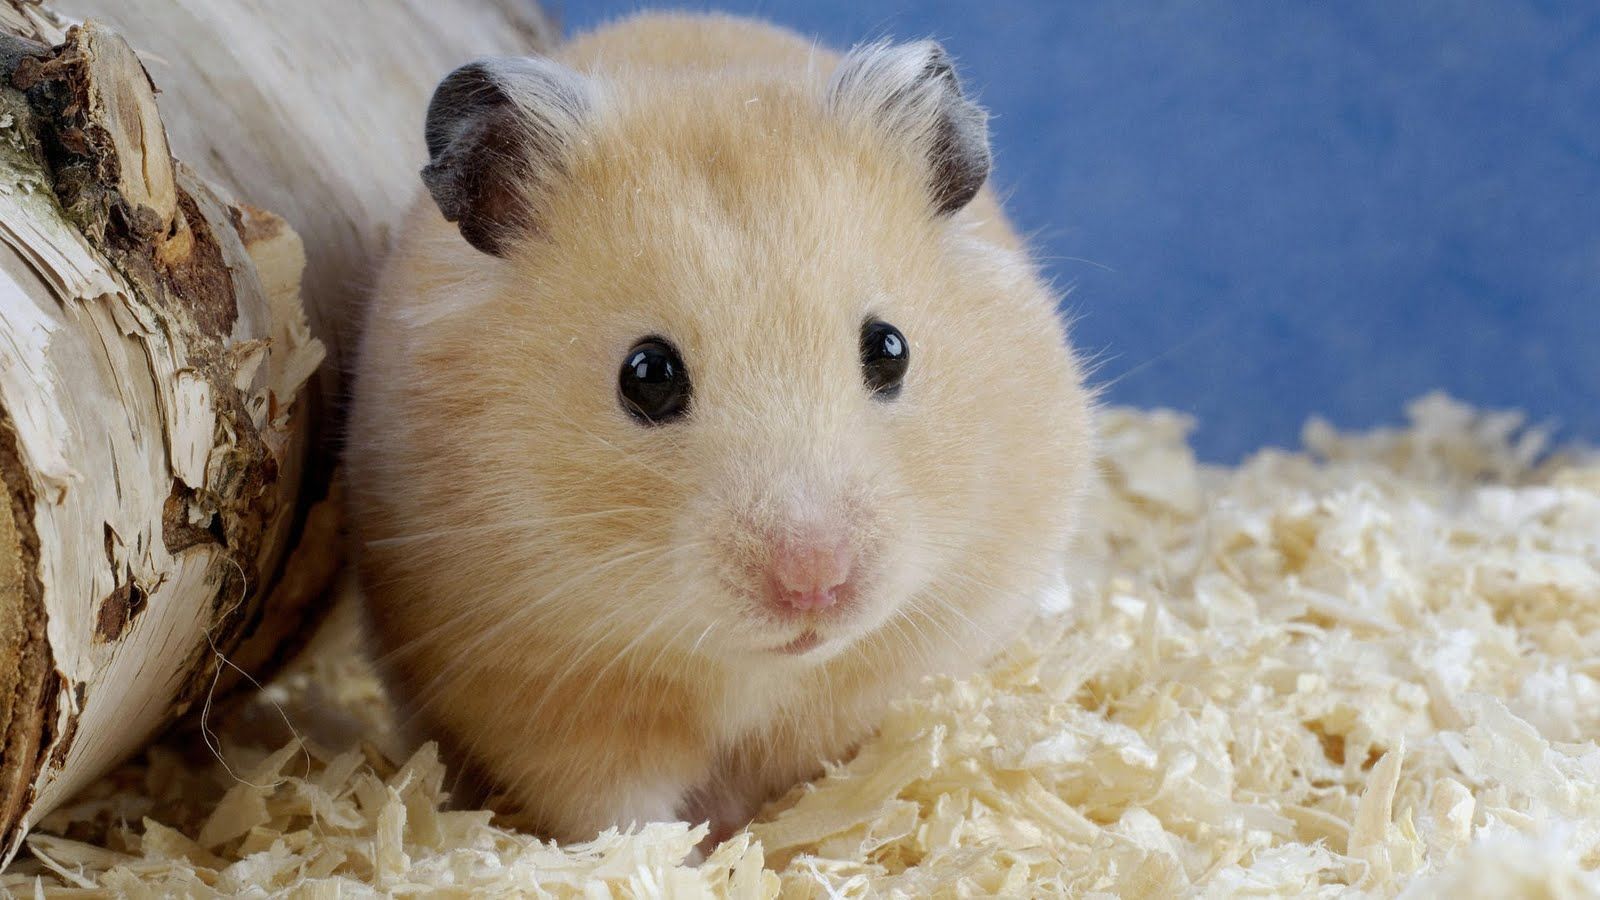 Free Wallpaper Archive: 10 Hamster Wallpaper. Hamster pics, Cute hamsters, Hamster